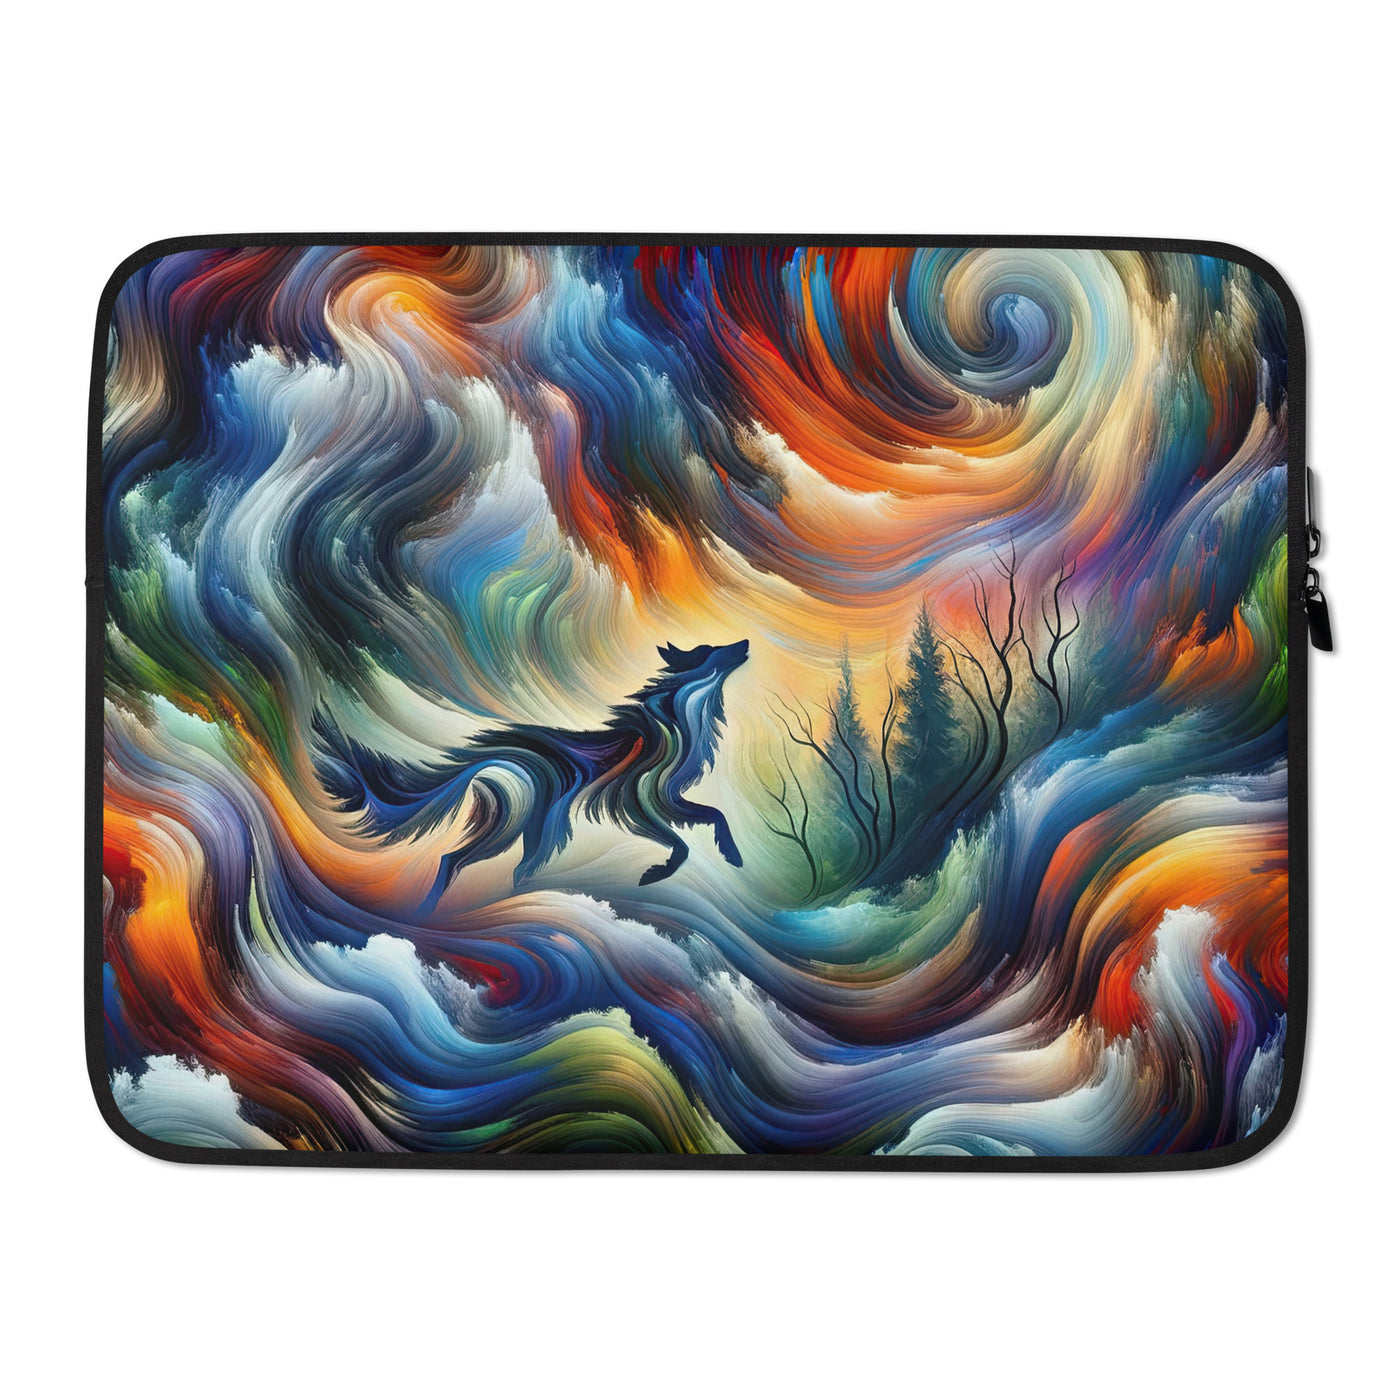 Alpen Abstraktgemälde mit Wolf Silhouette in lebhaften Farben (AN) - Laptophülle xxx yyy zzz 15″